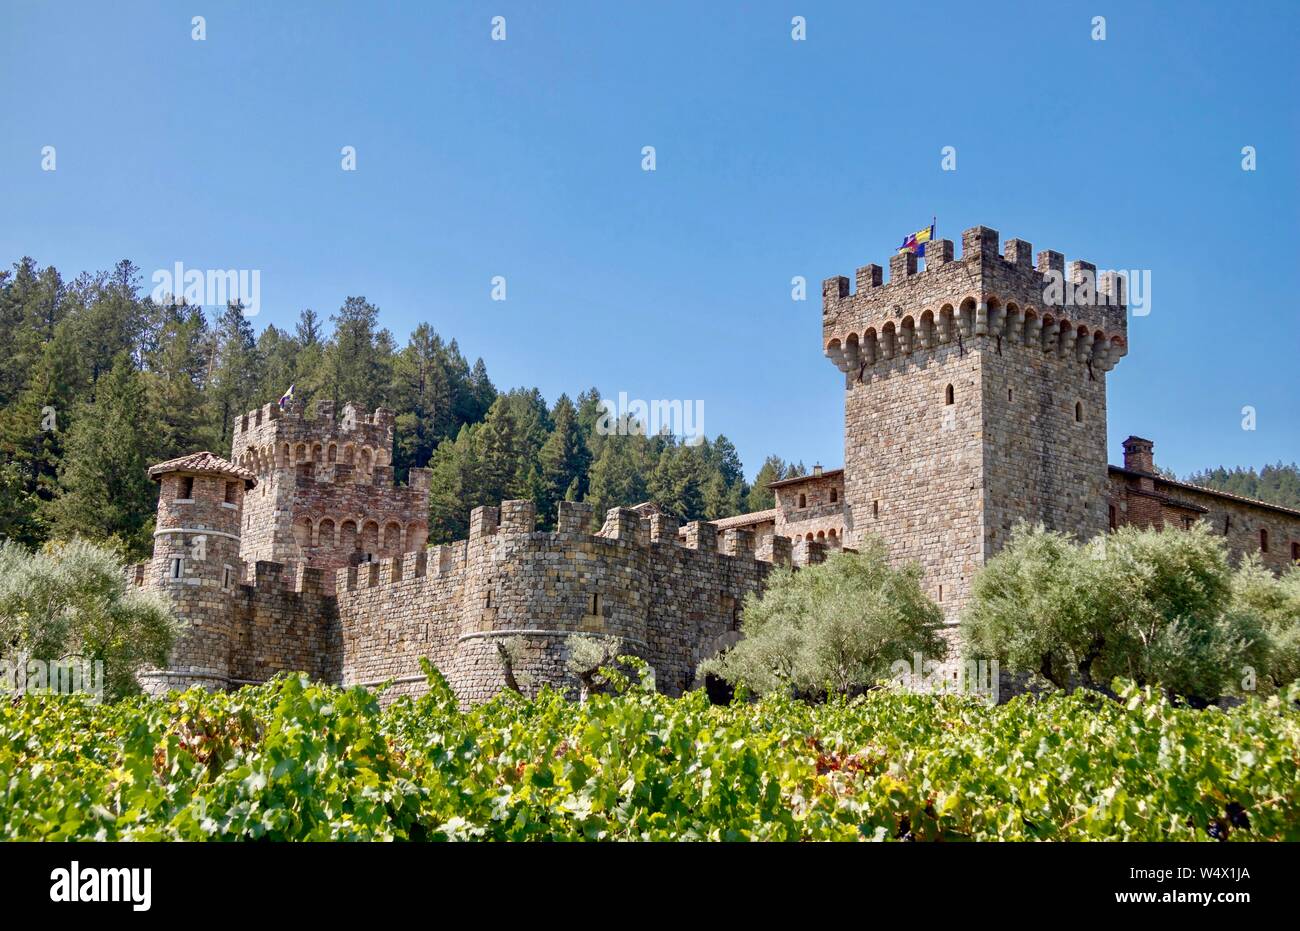 Castello di Amorosa in Calistoga California, a tuscan inspired winery in Napa Valley Stock Photo